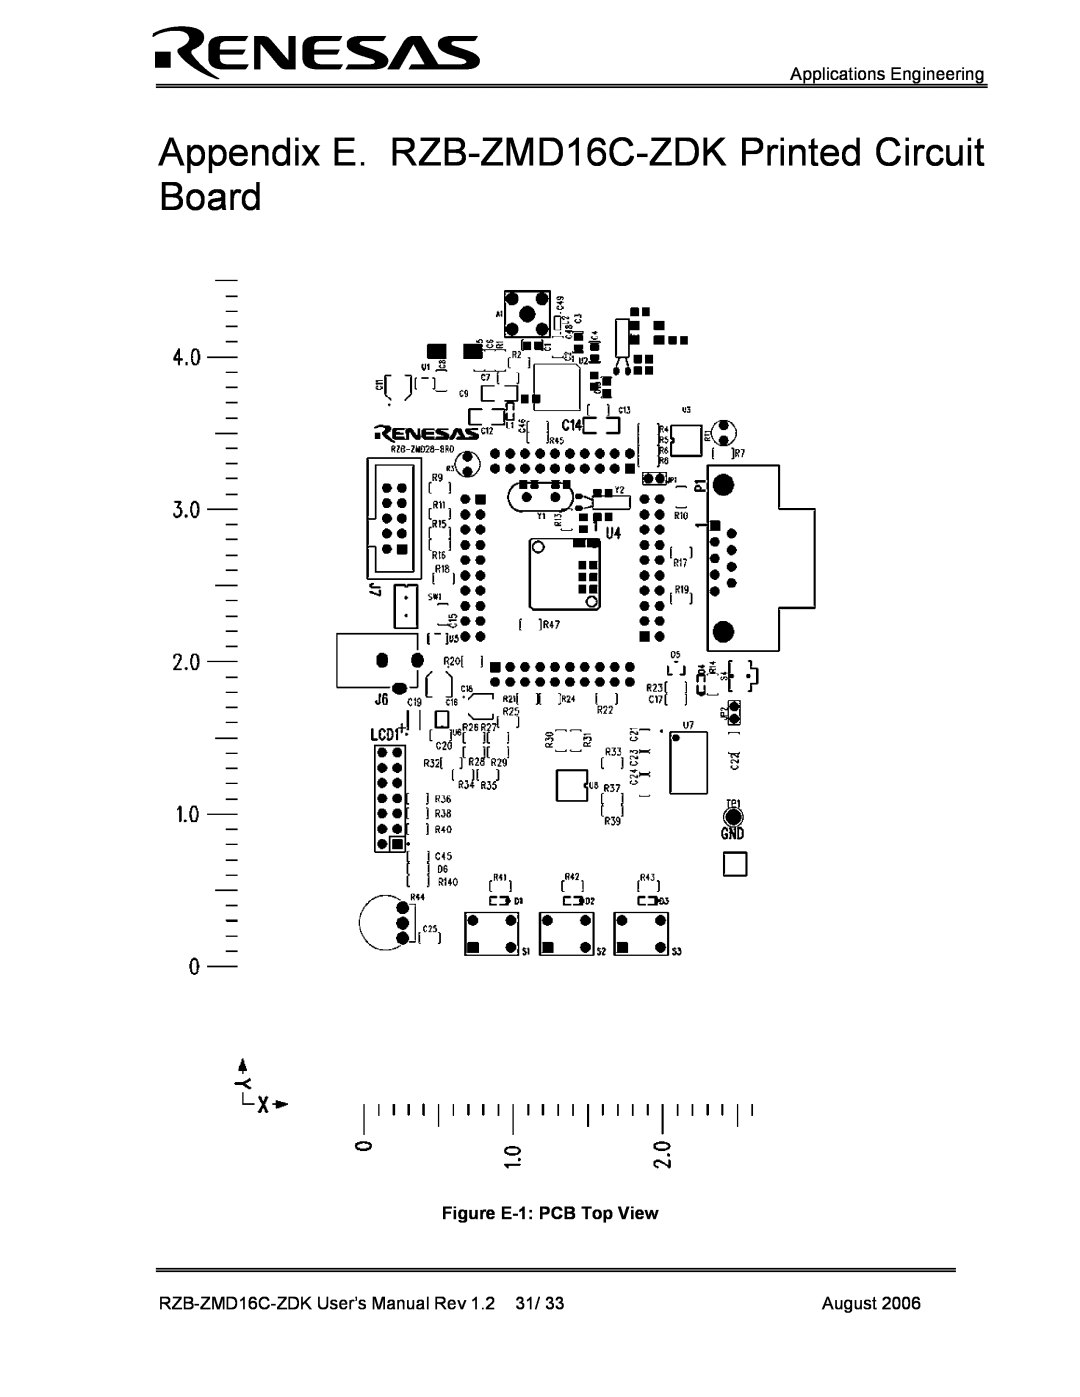 Renesas user manual Appendix E. RZB-ZMD16C-ZDKPrinted Circuit Board, Figure E-1 PCB Top View 